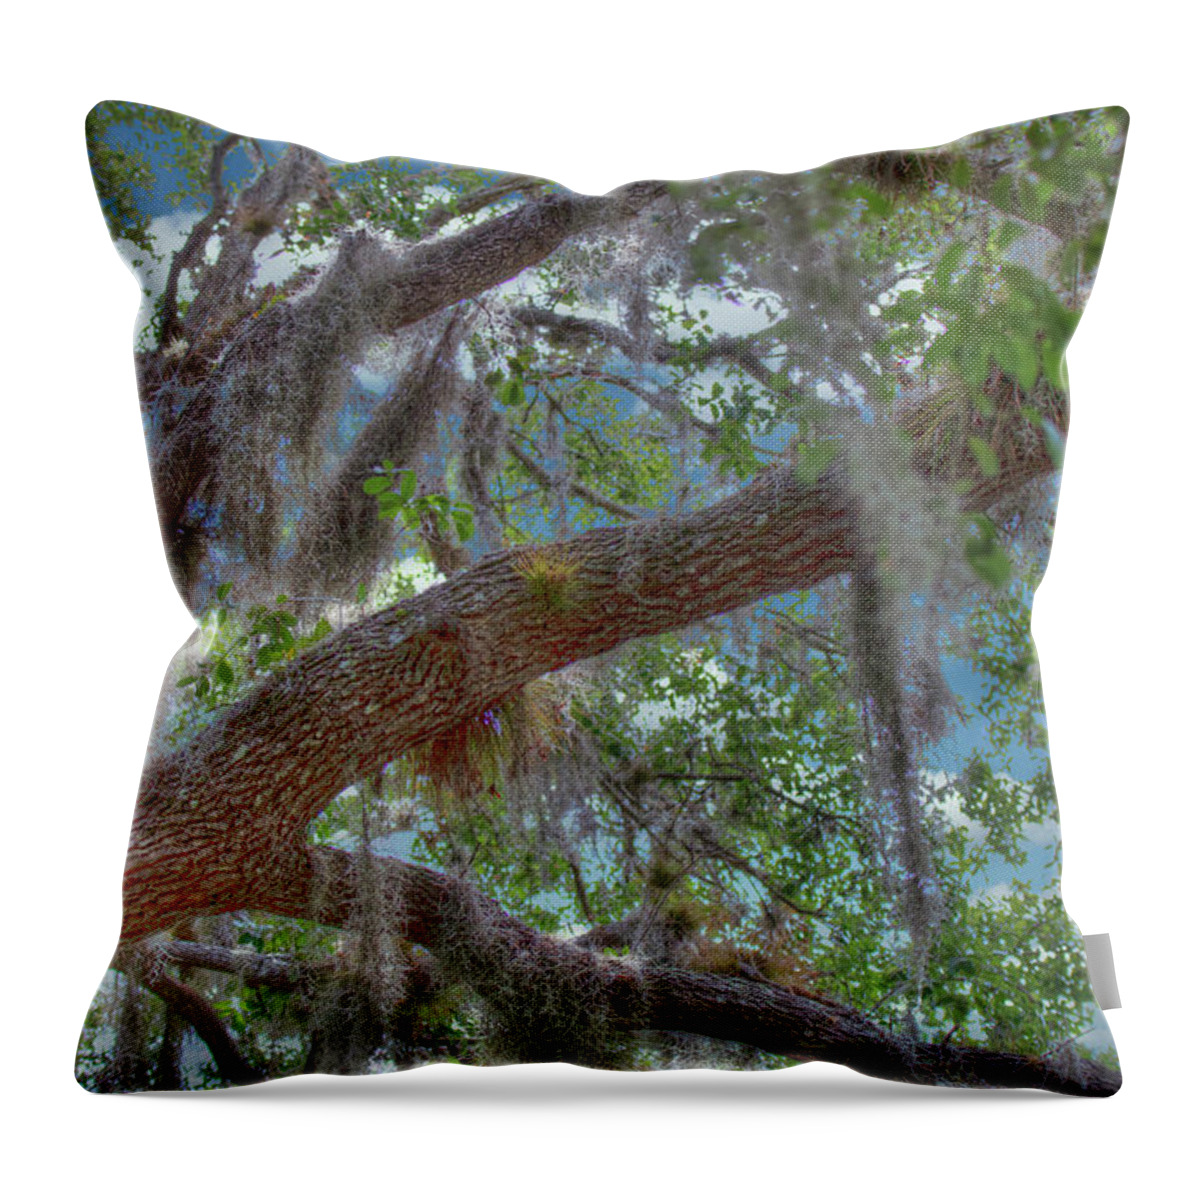 Florida Throw Pillow featuring the photograph Florida Woods by Richard Goldman